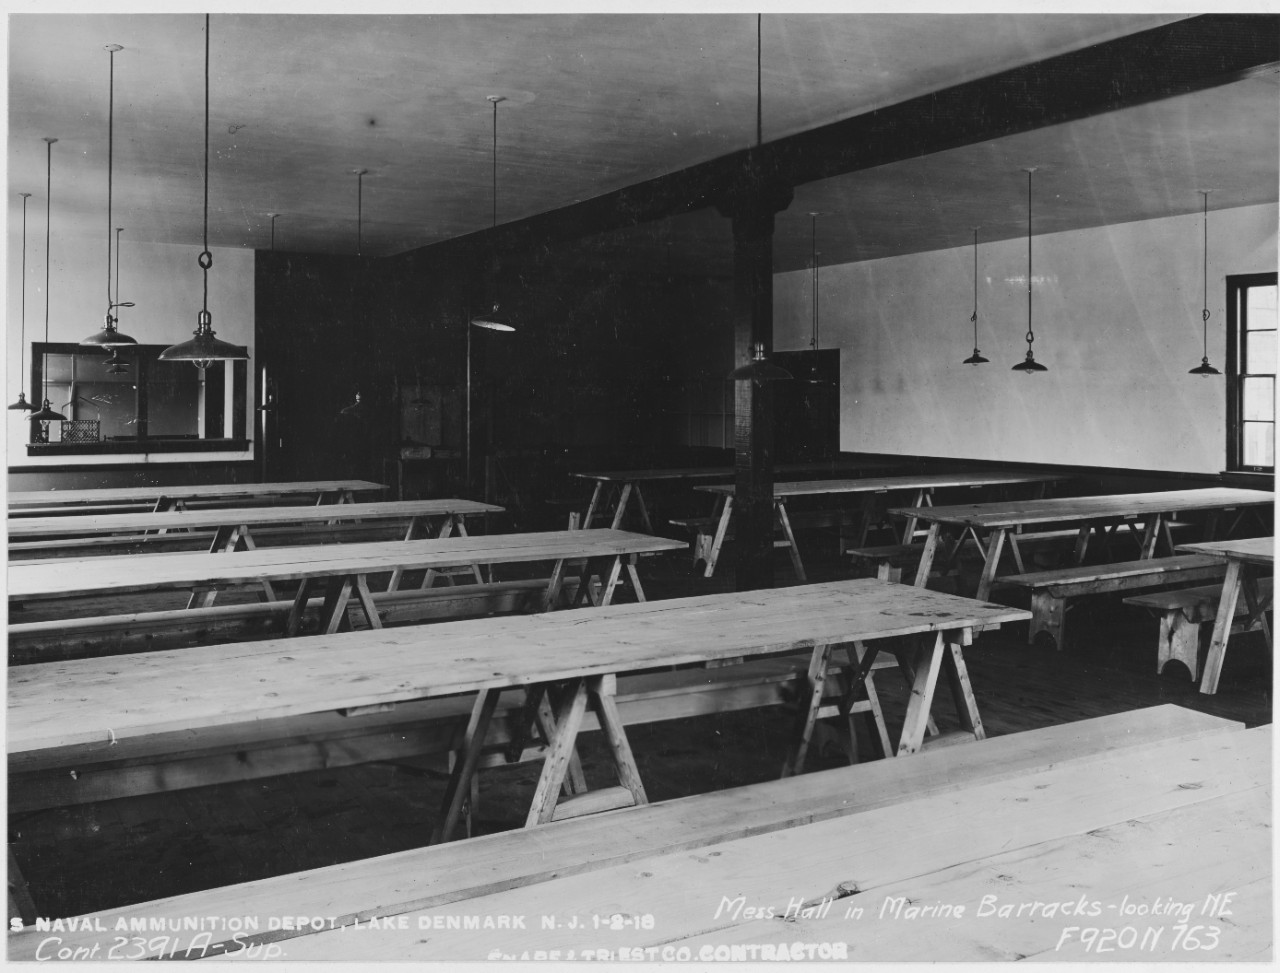 USN Ammunition Depot, Lake Denmark, New York. Mess Hall in Marine Barracks. 1/02/1918